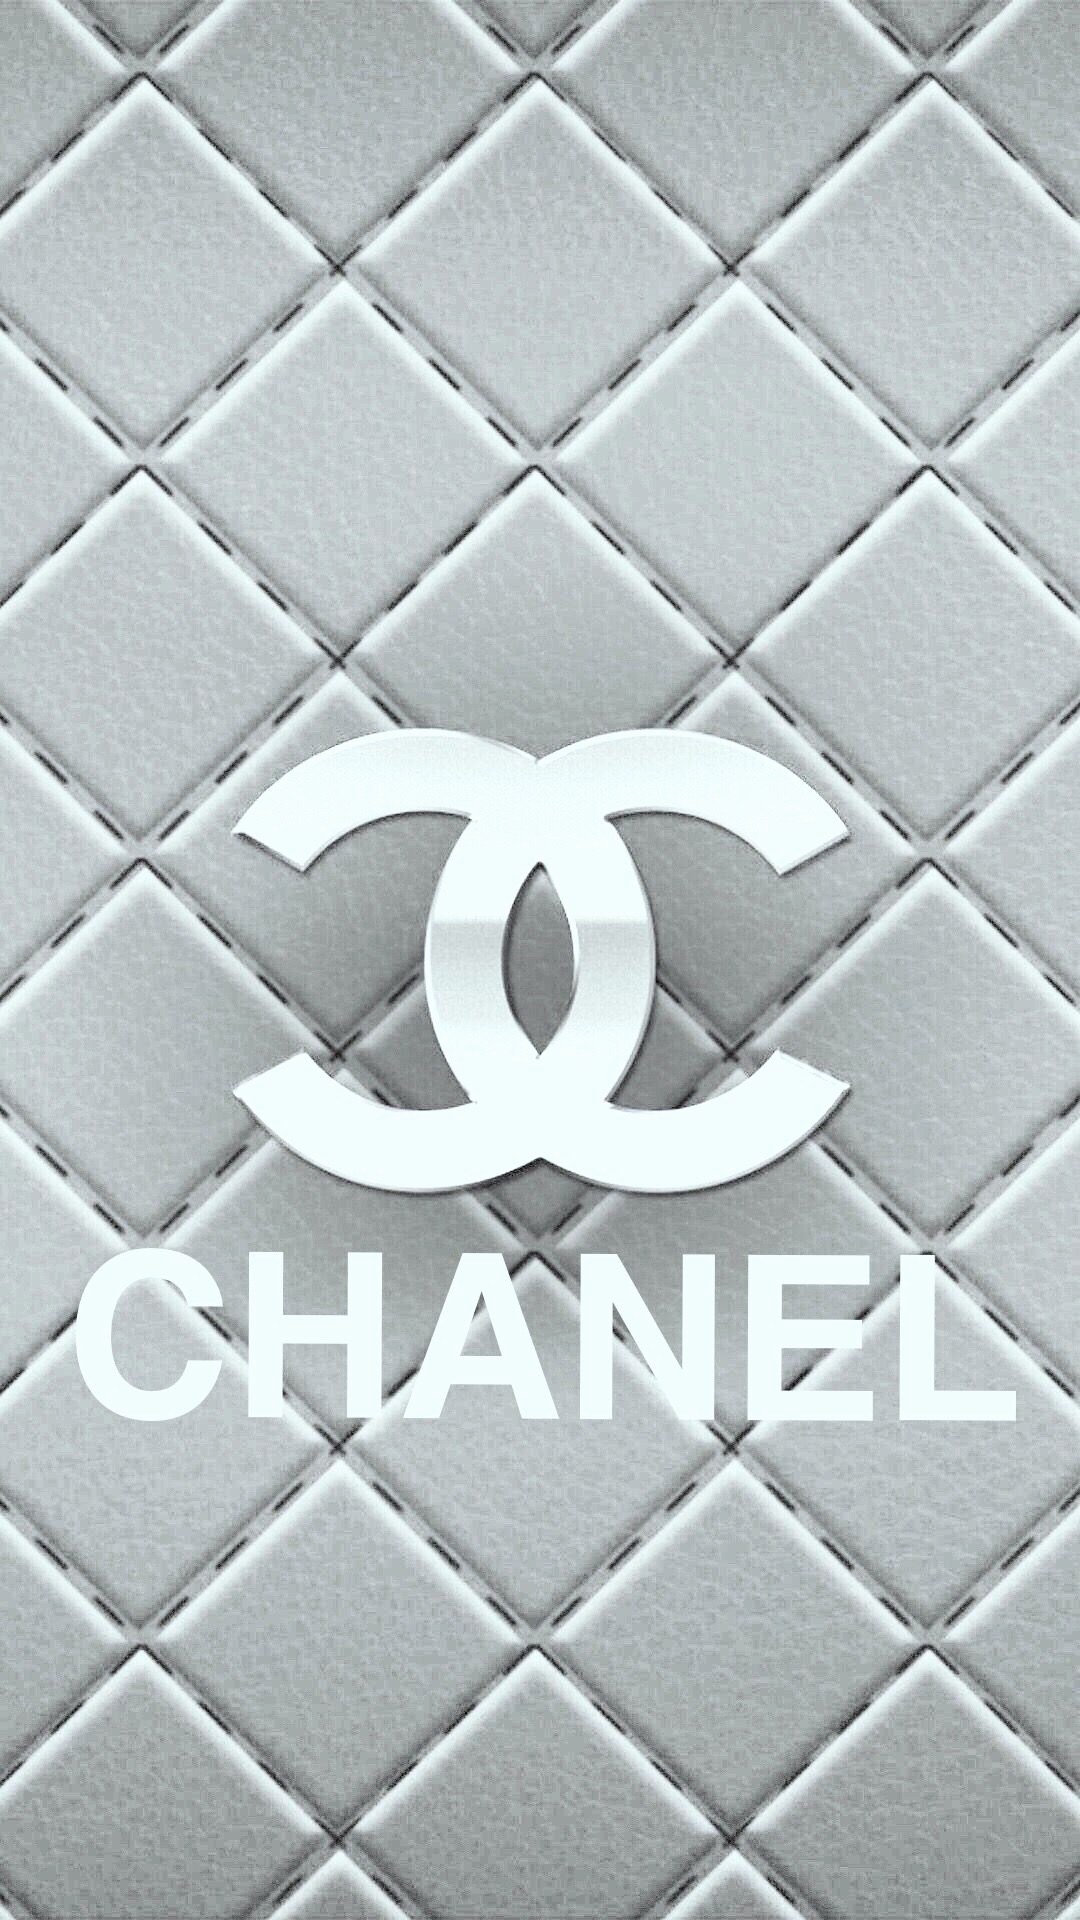 versace wallpaper,tile,pattern,design,flooring,logo